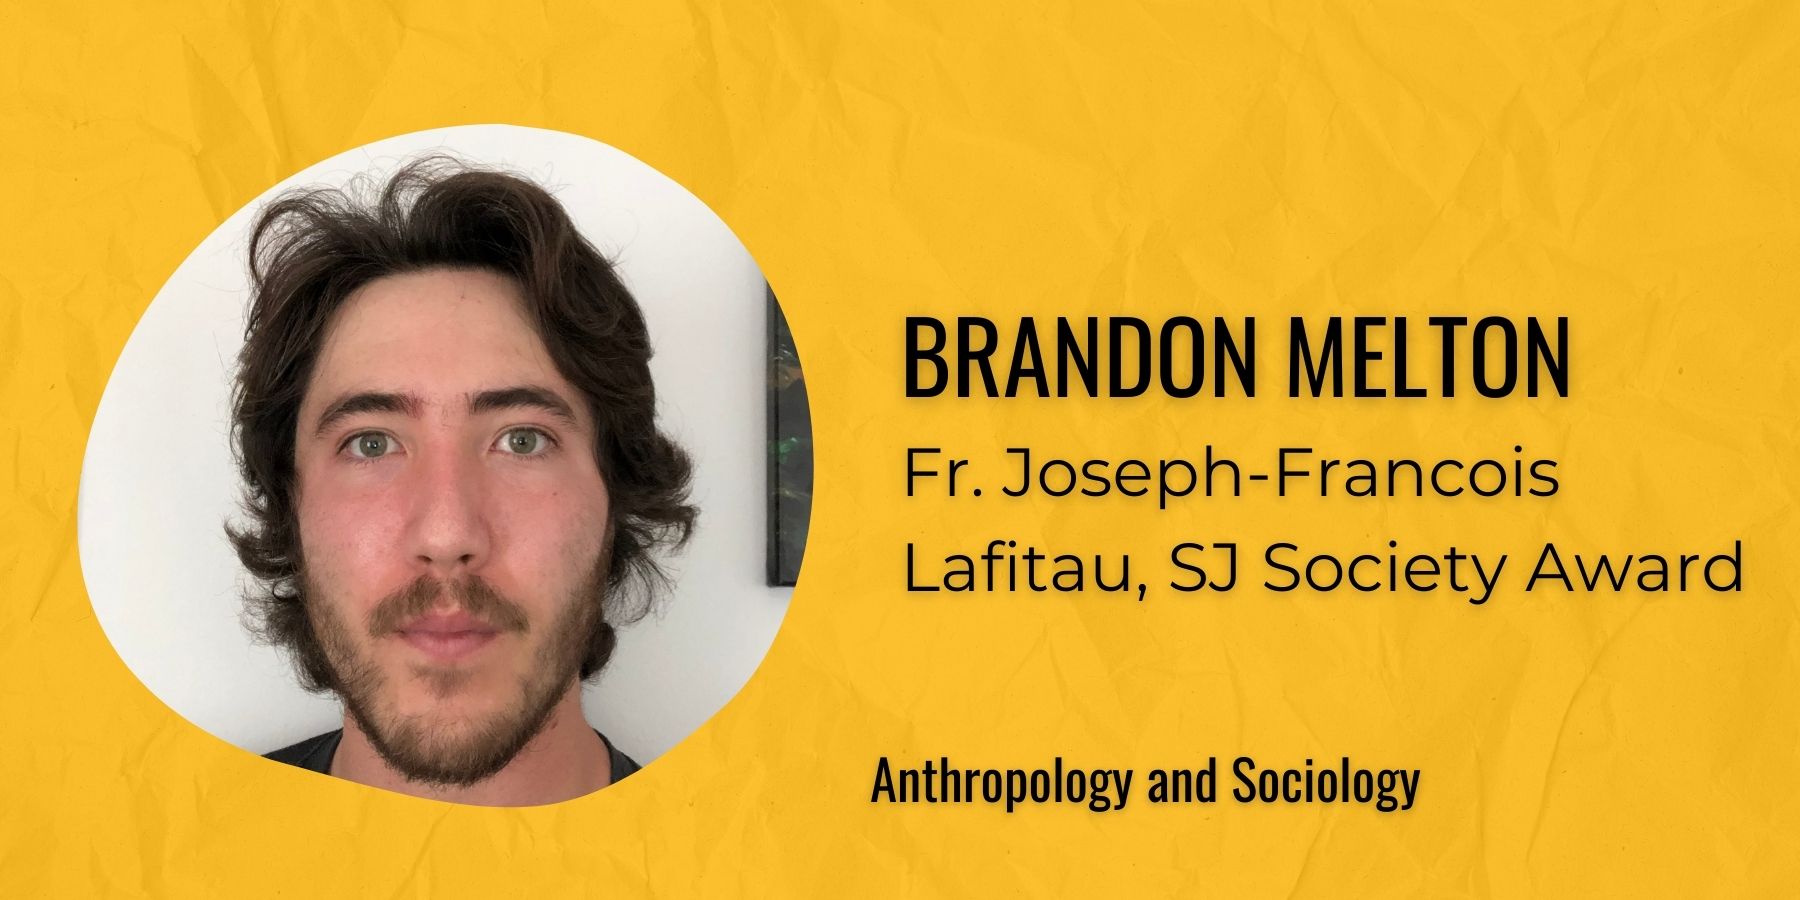 Image: Brandon Melton, text: Fr. Joseph-Francois Lafitau, SJ Society Award, Anthropology Sociology
